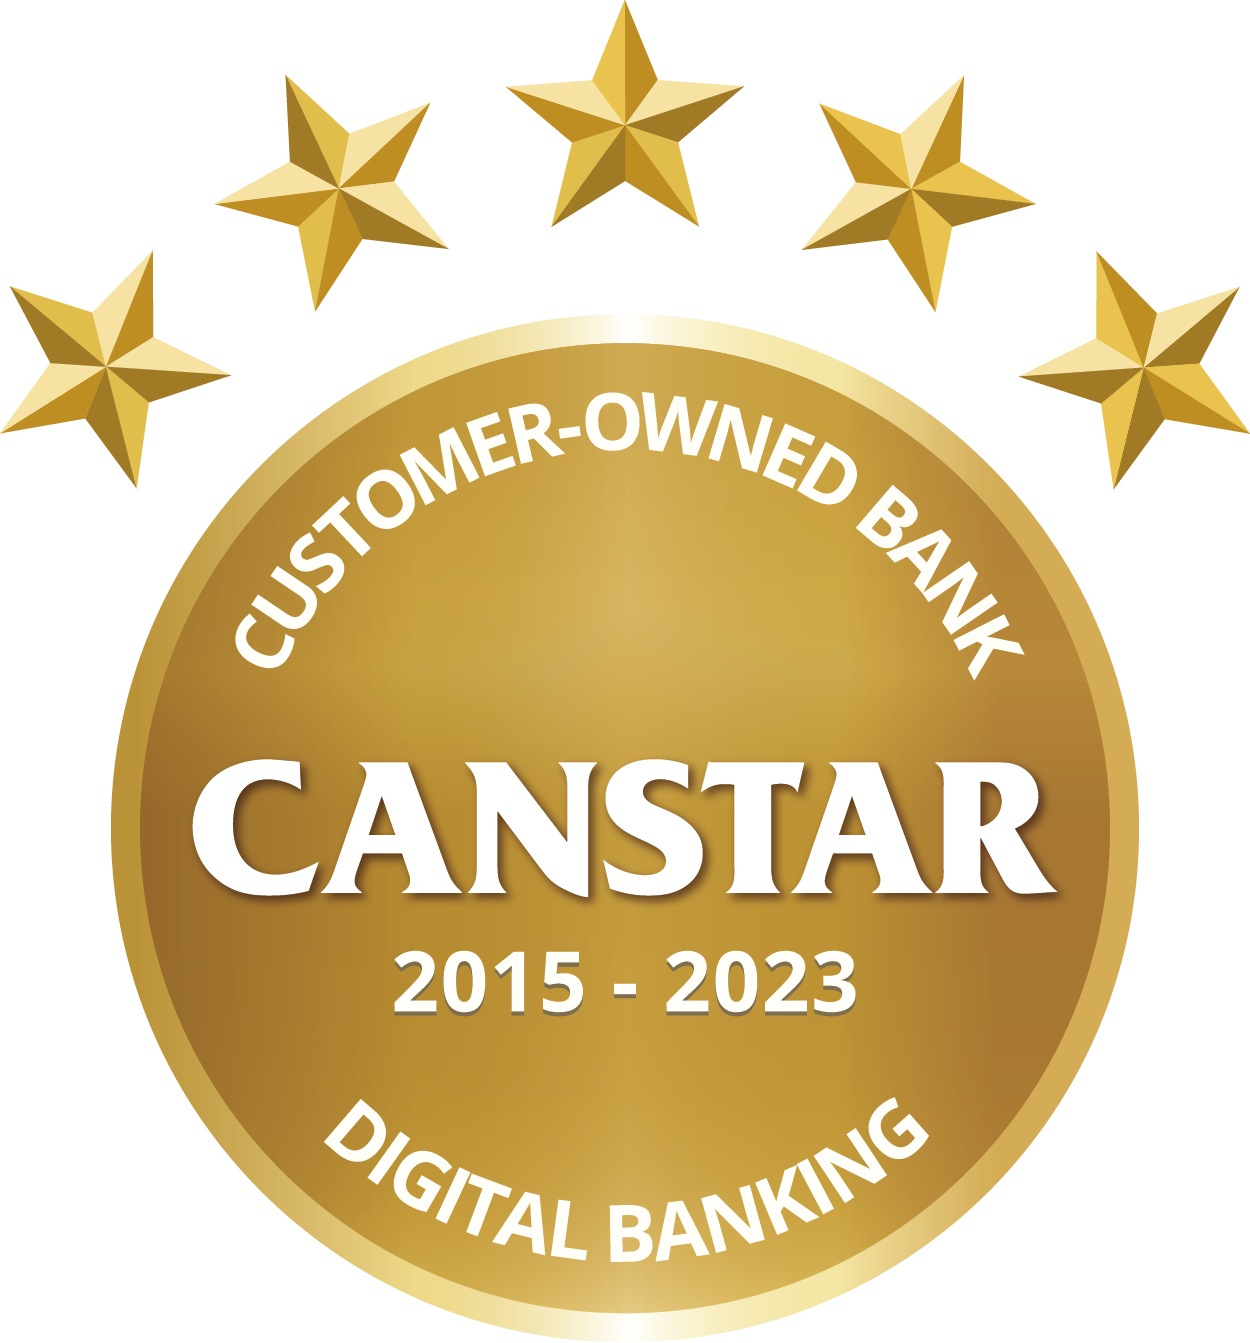 Canstar 15-23 Digital Banking